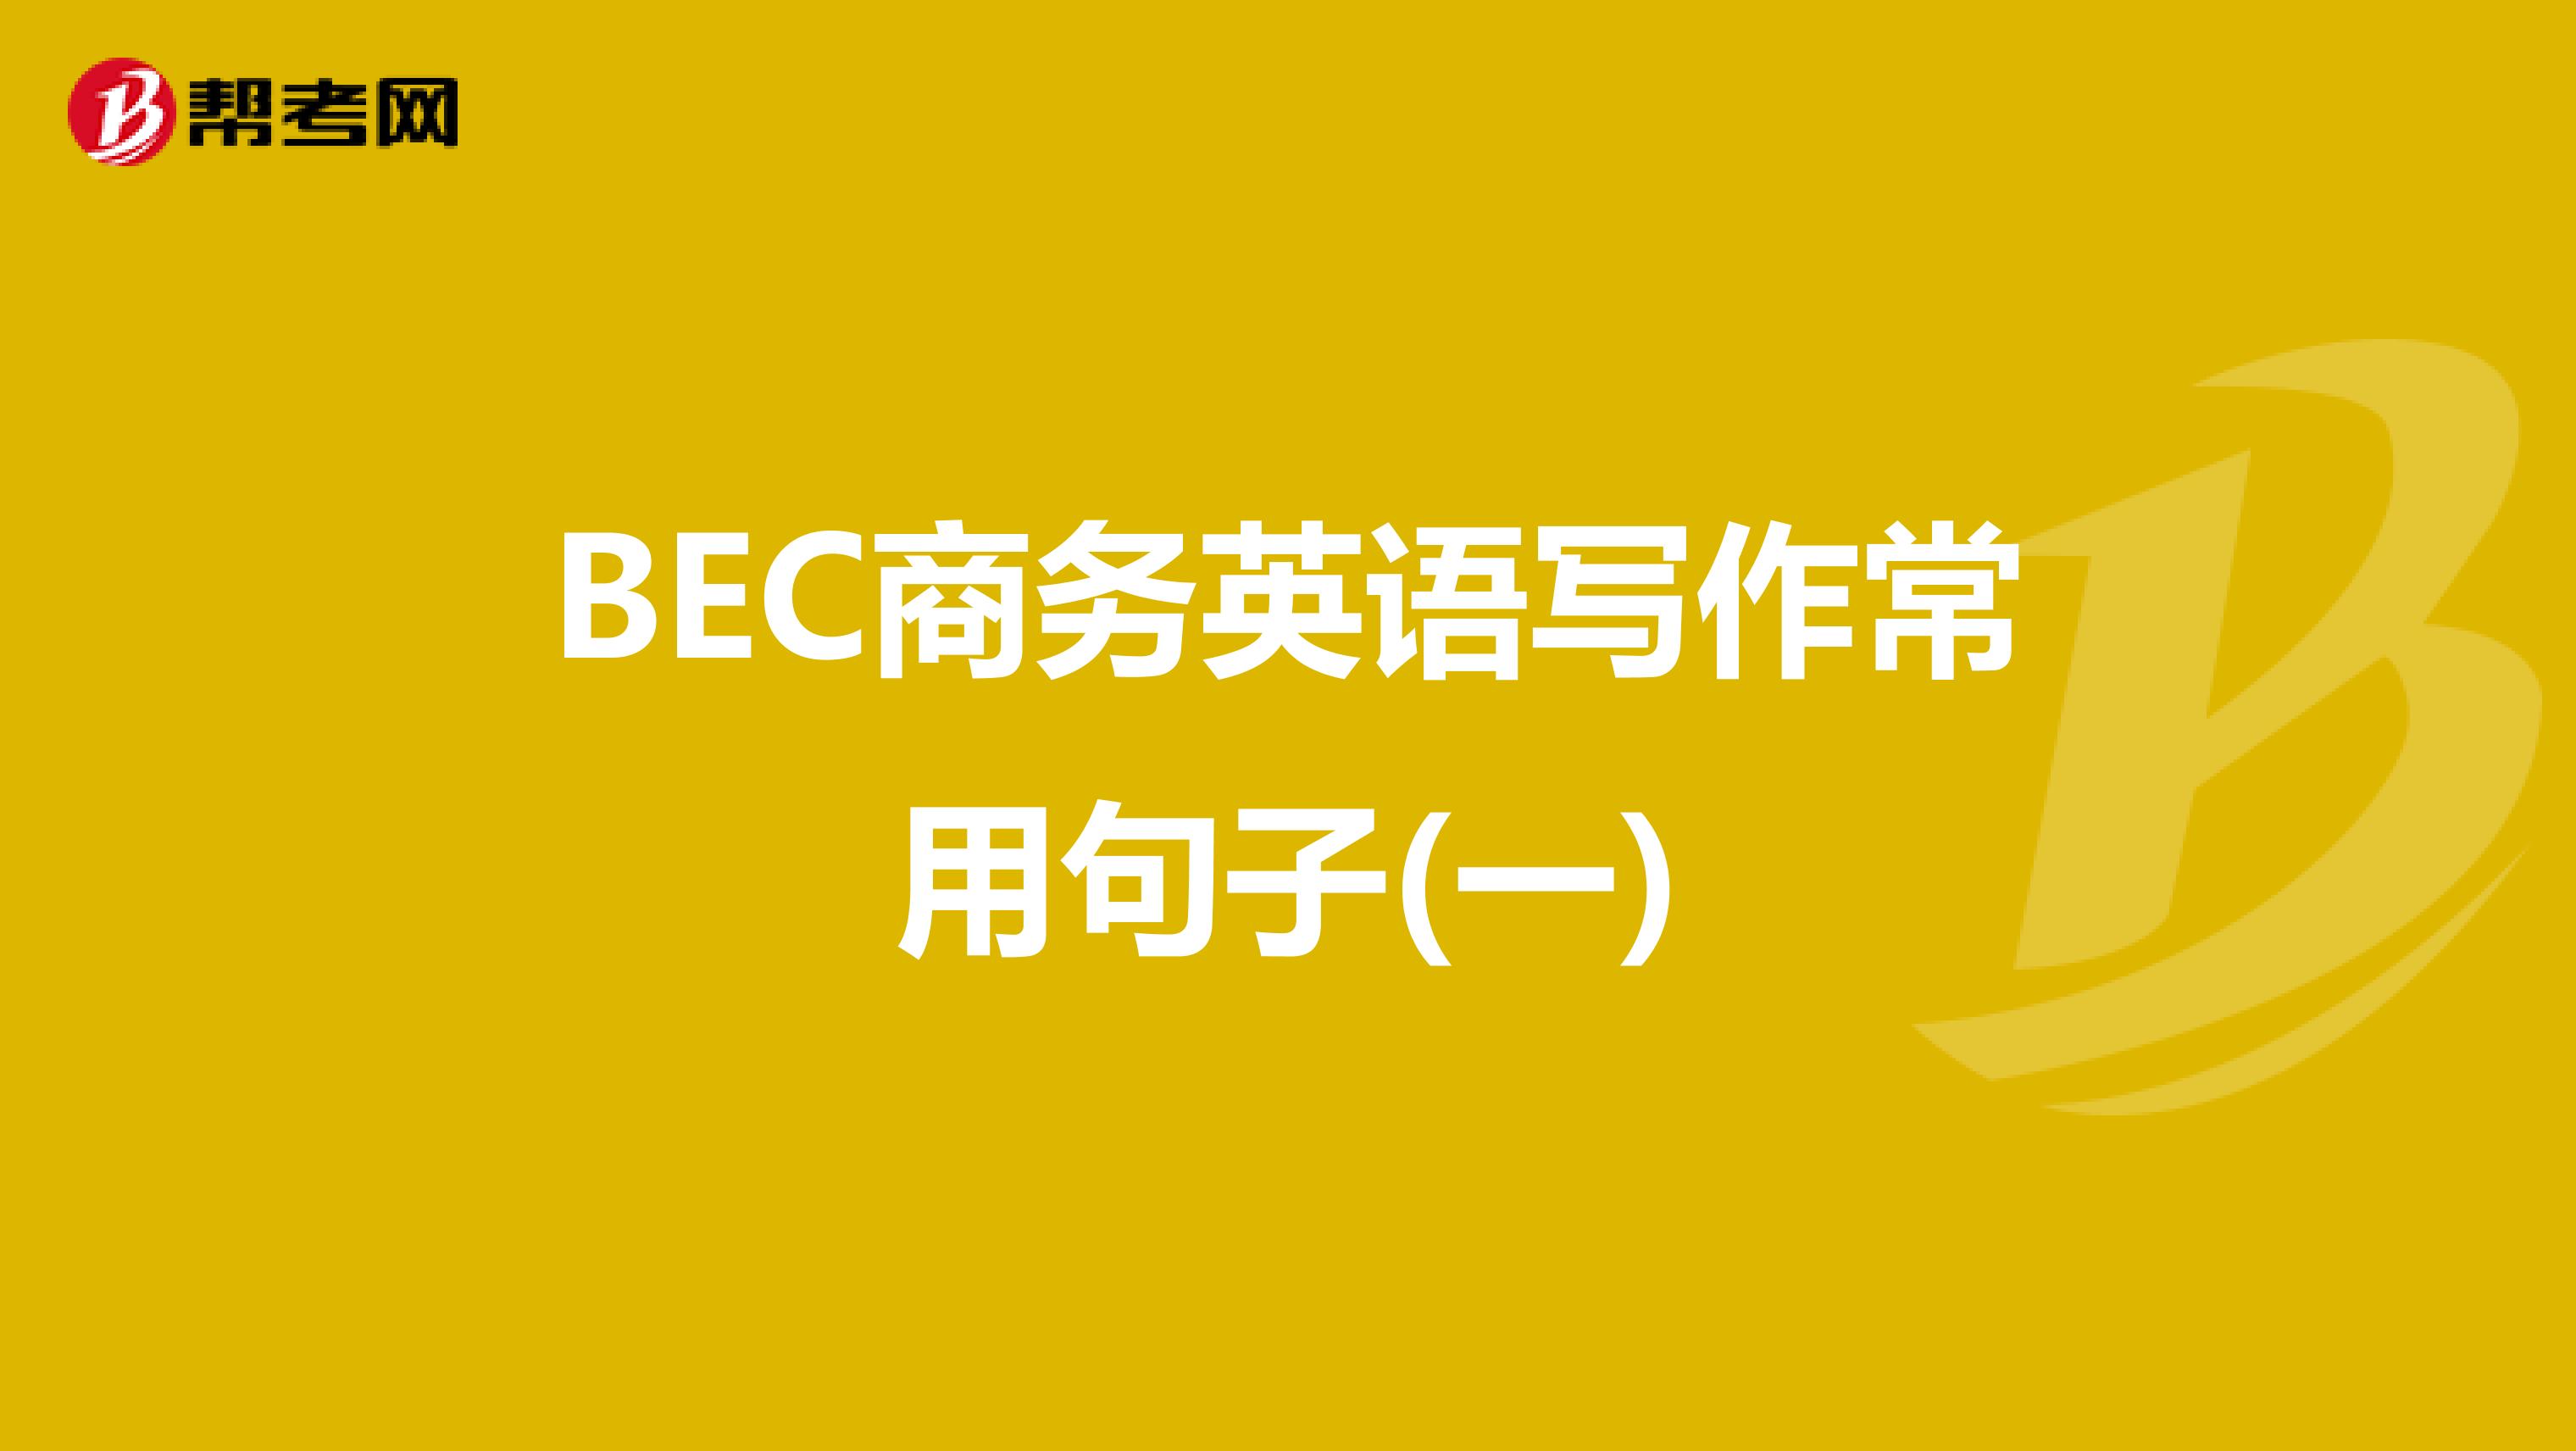  BEC商务英语写作常用句子(一)